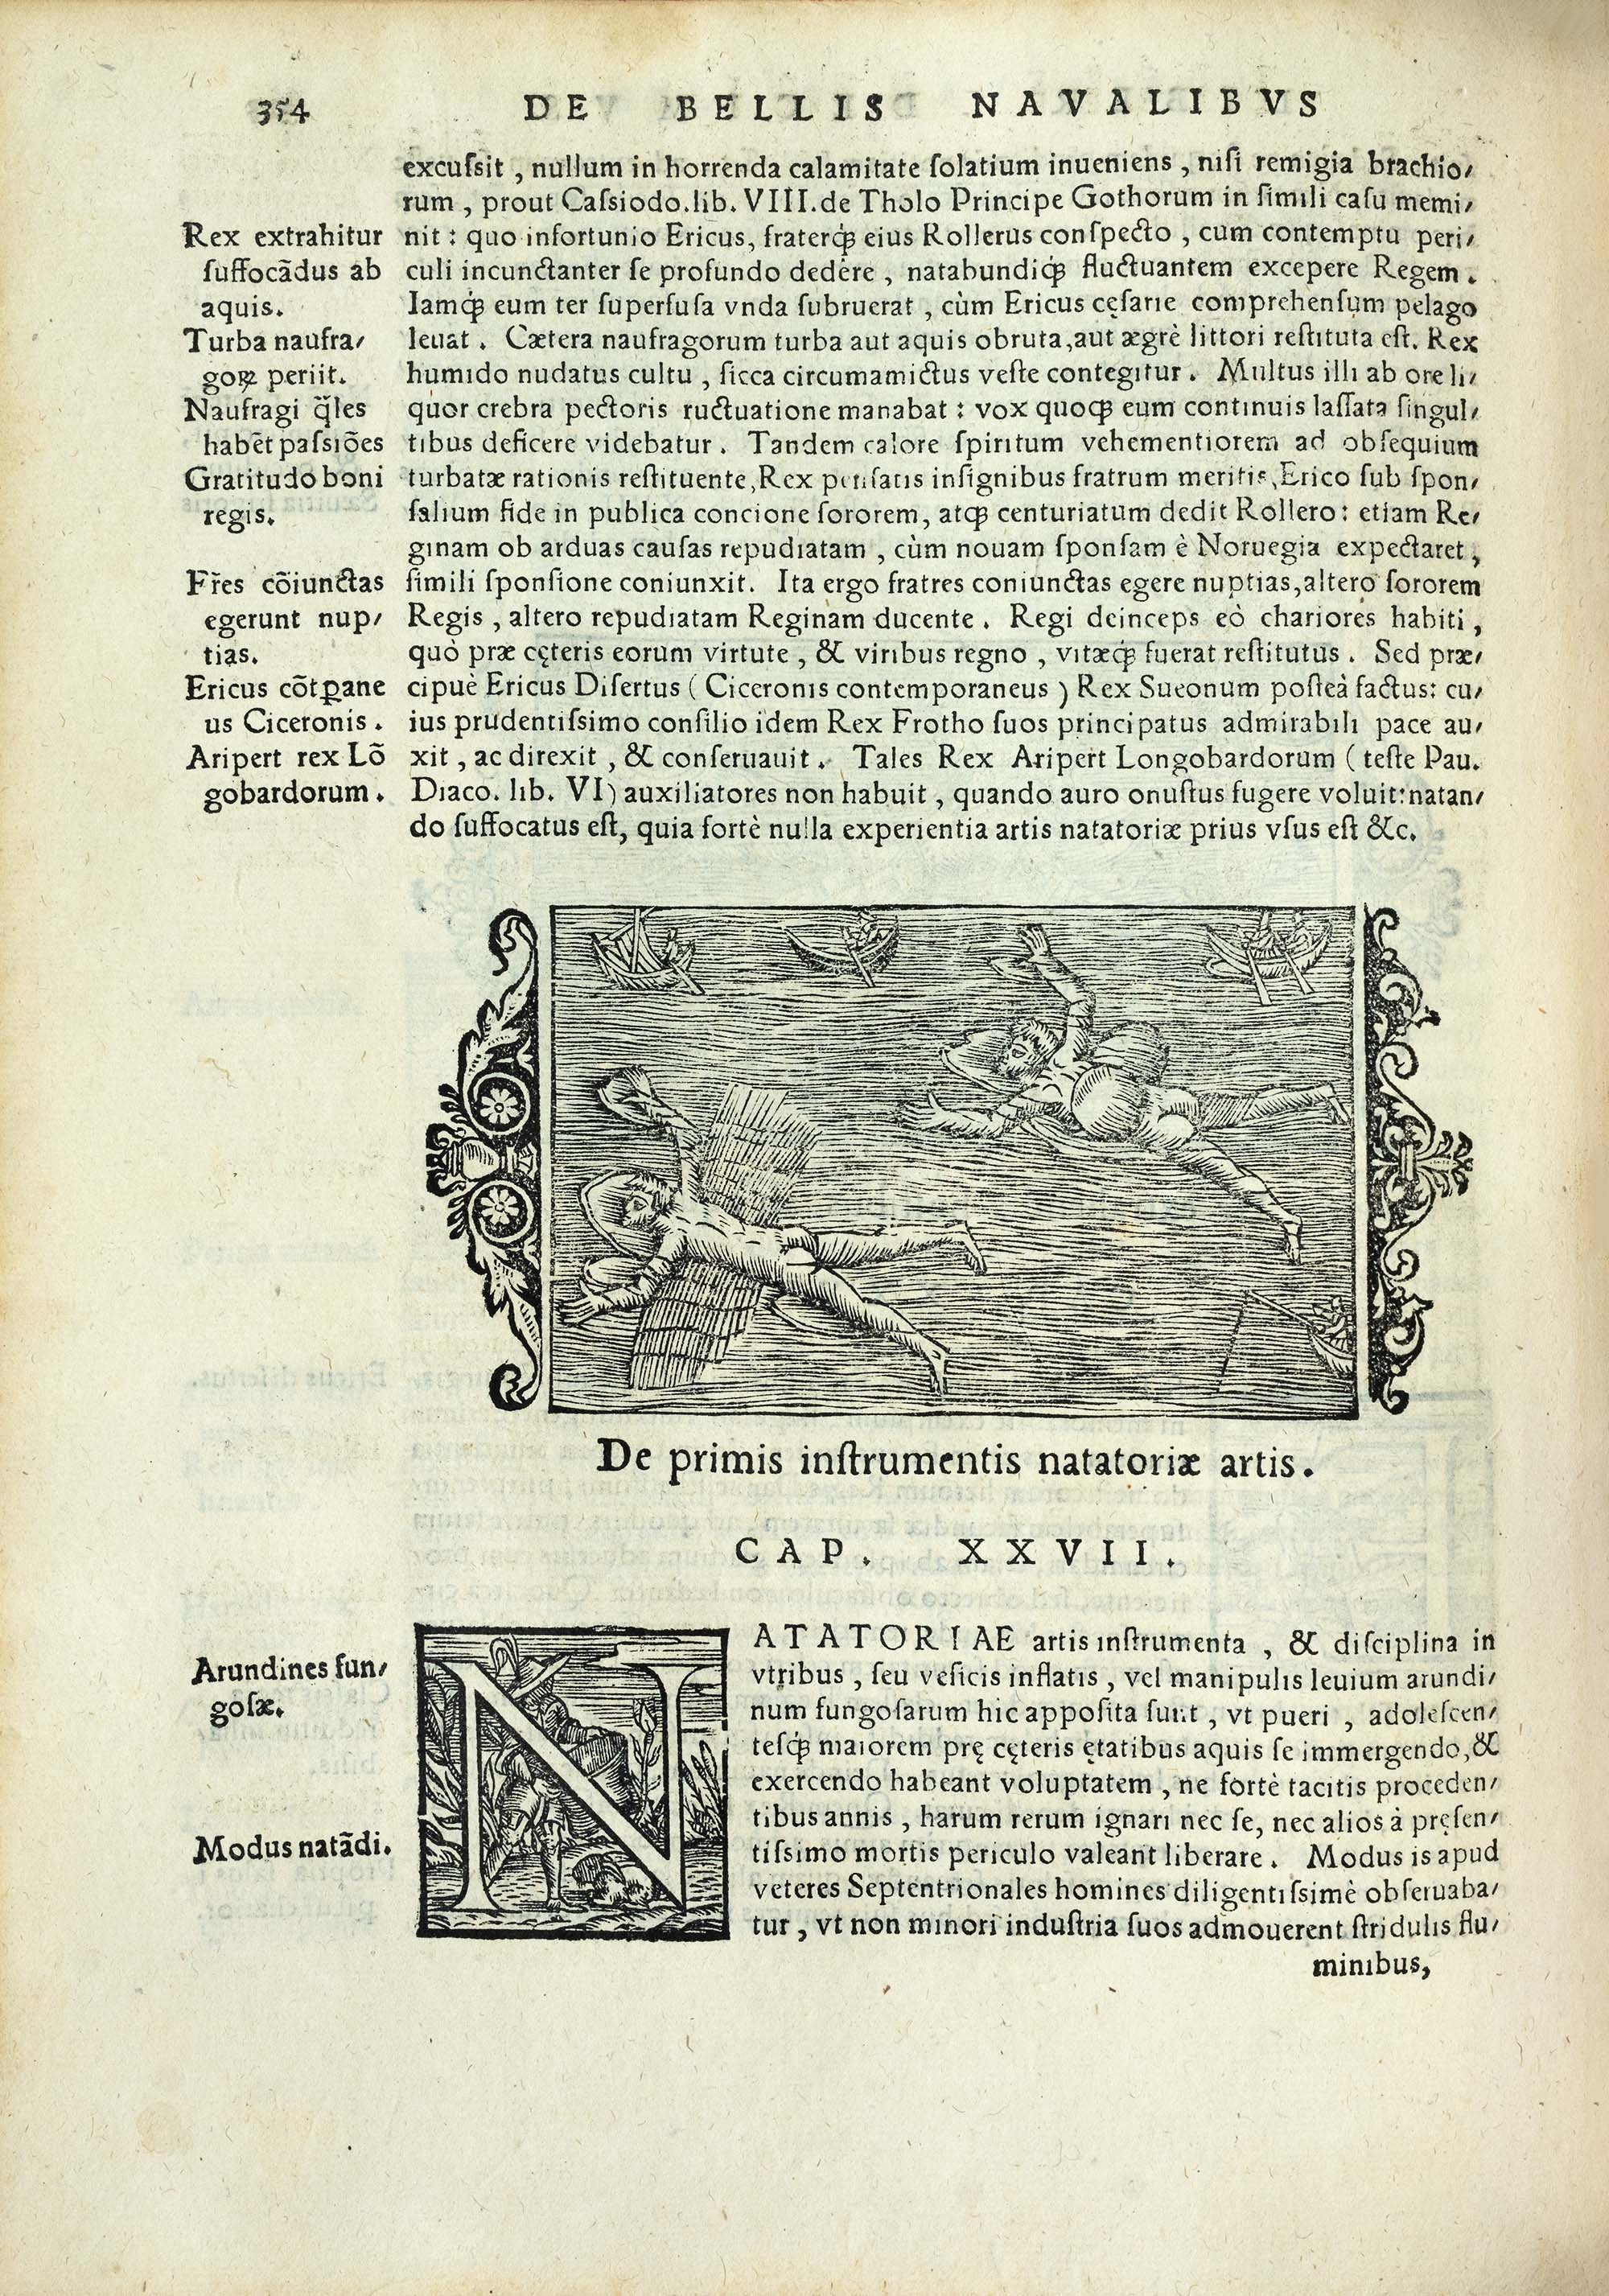 Olaus-Magnus-Historia-scandinavia-1555-first-edition-brunck-jeanson-30.jpg